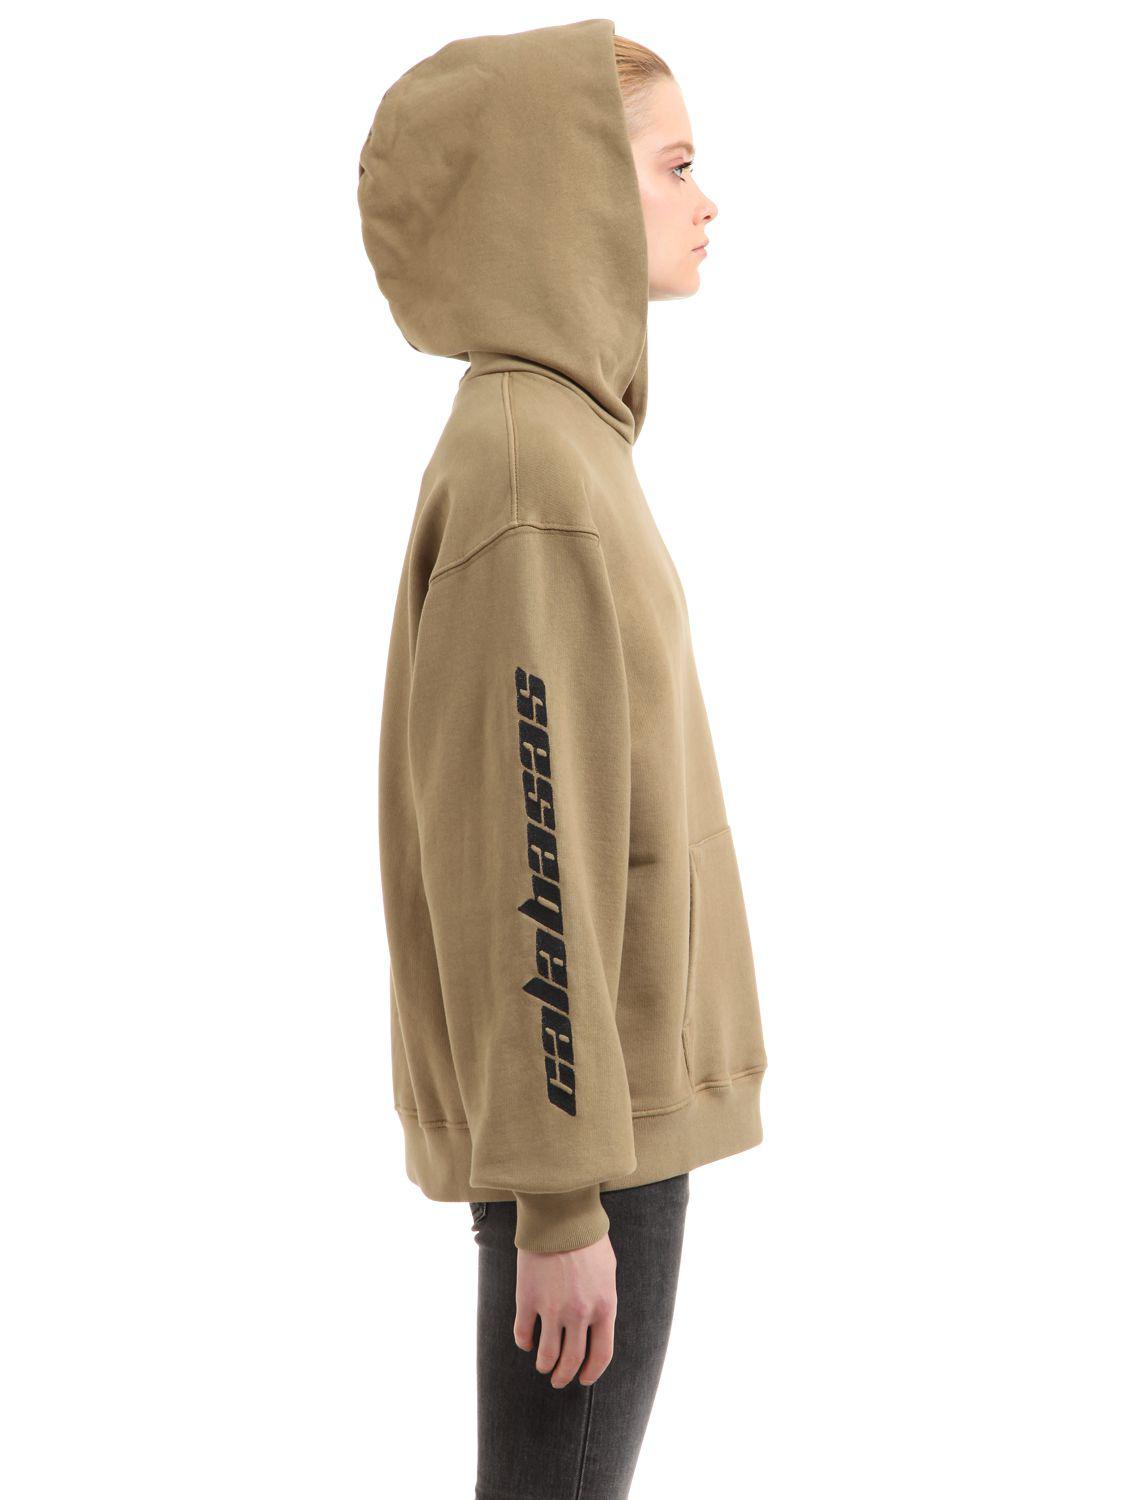 Yeezy Calabasas Hooded Cotton Sweatshirt in Brown | Lyst